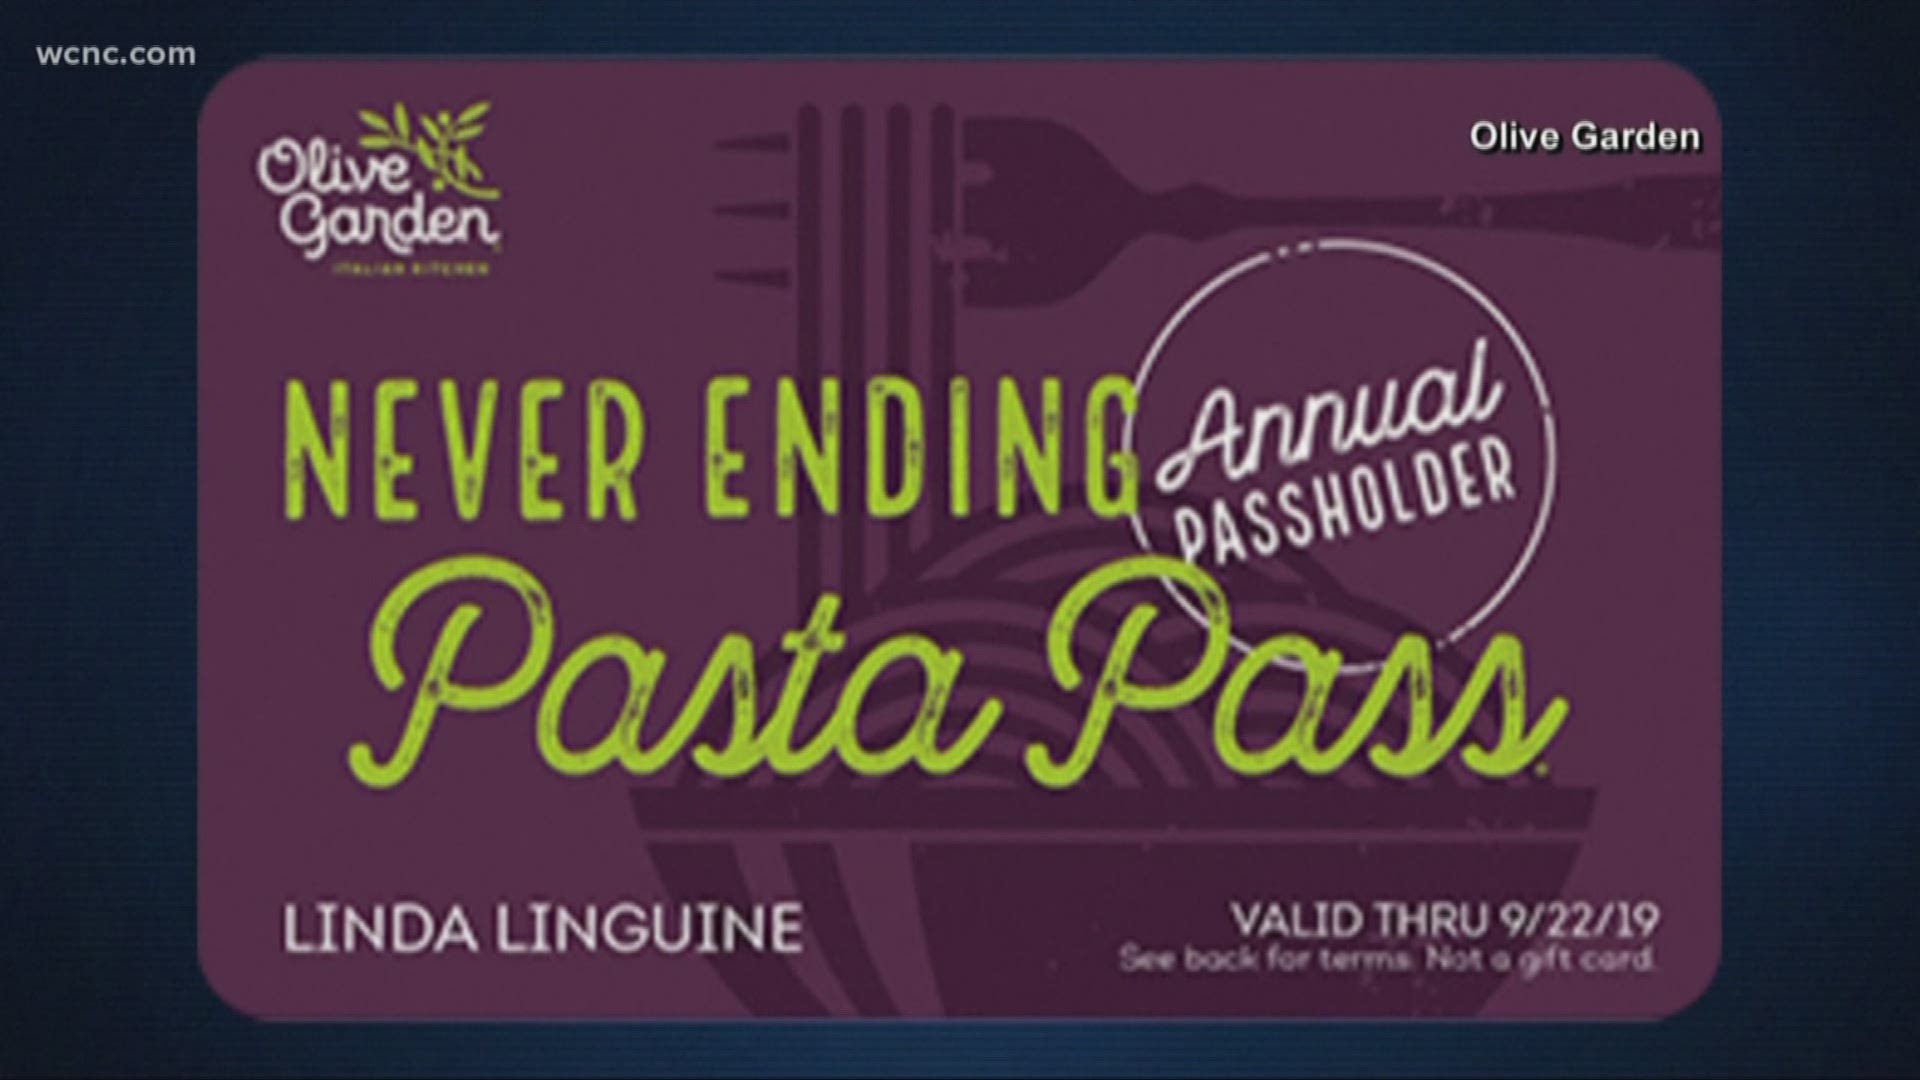 Olive Garden's Never Ending Pasta Pass is back